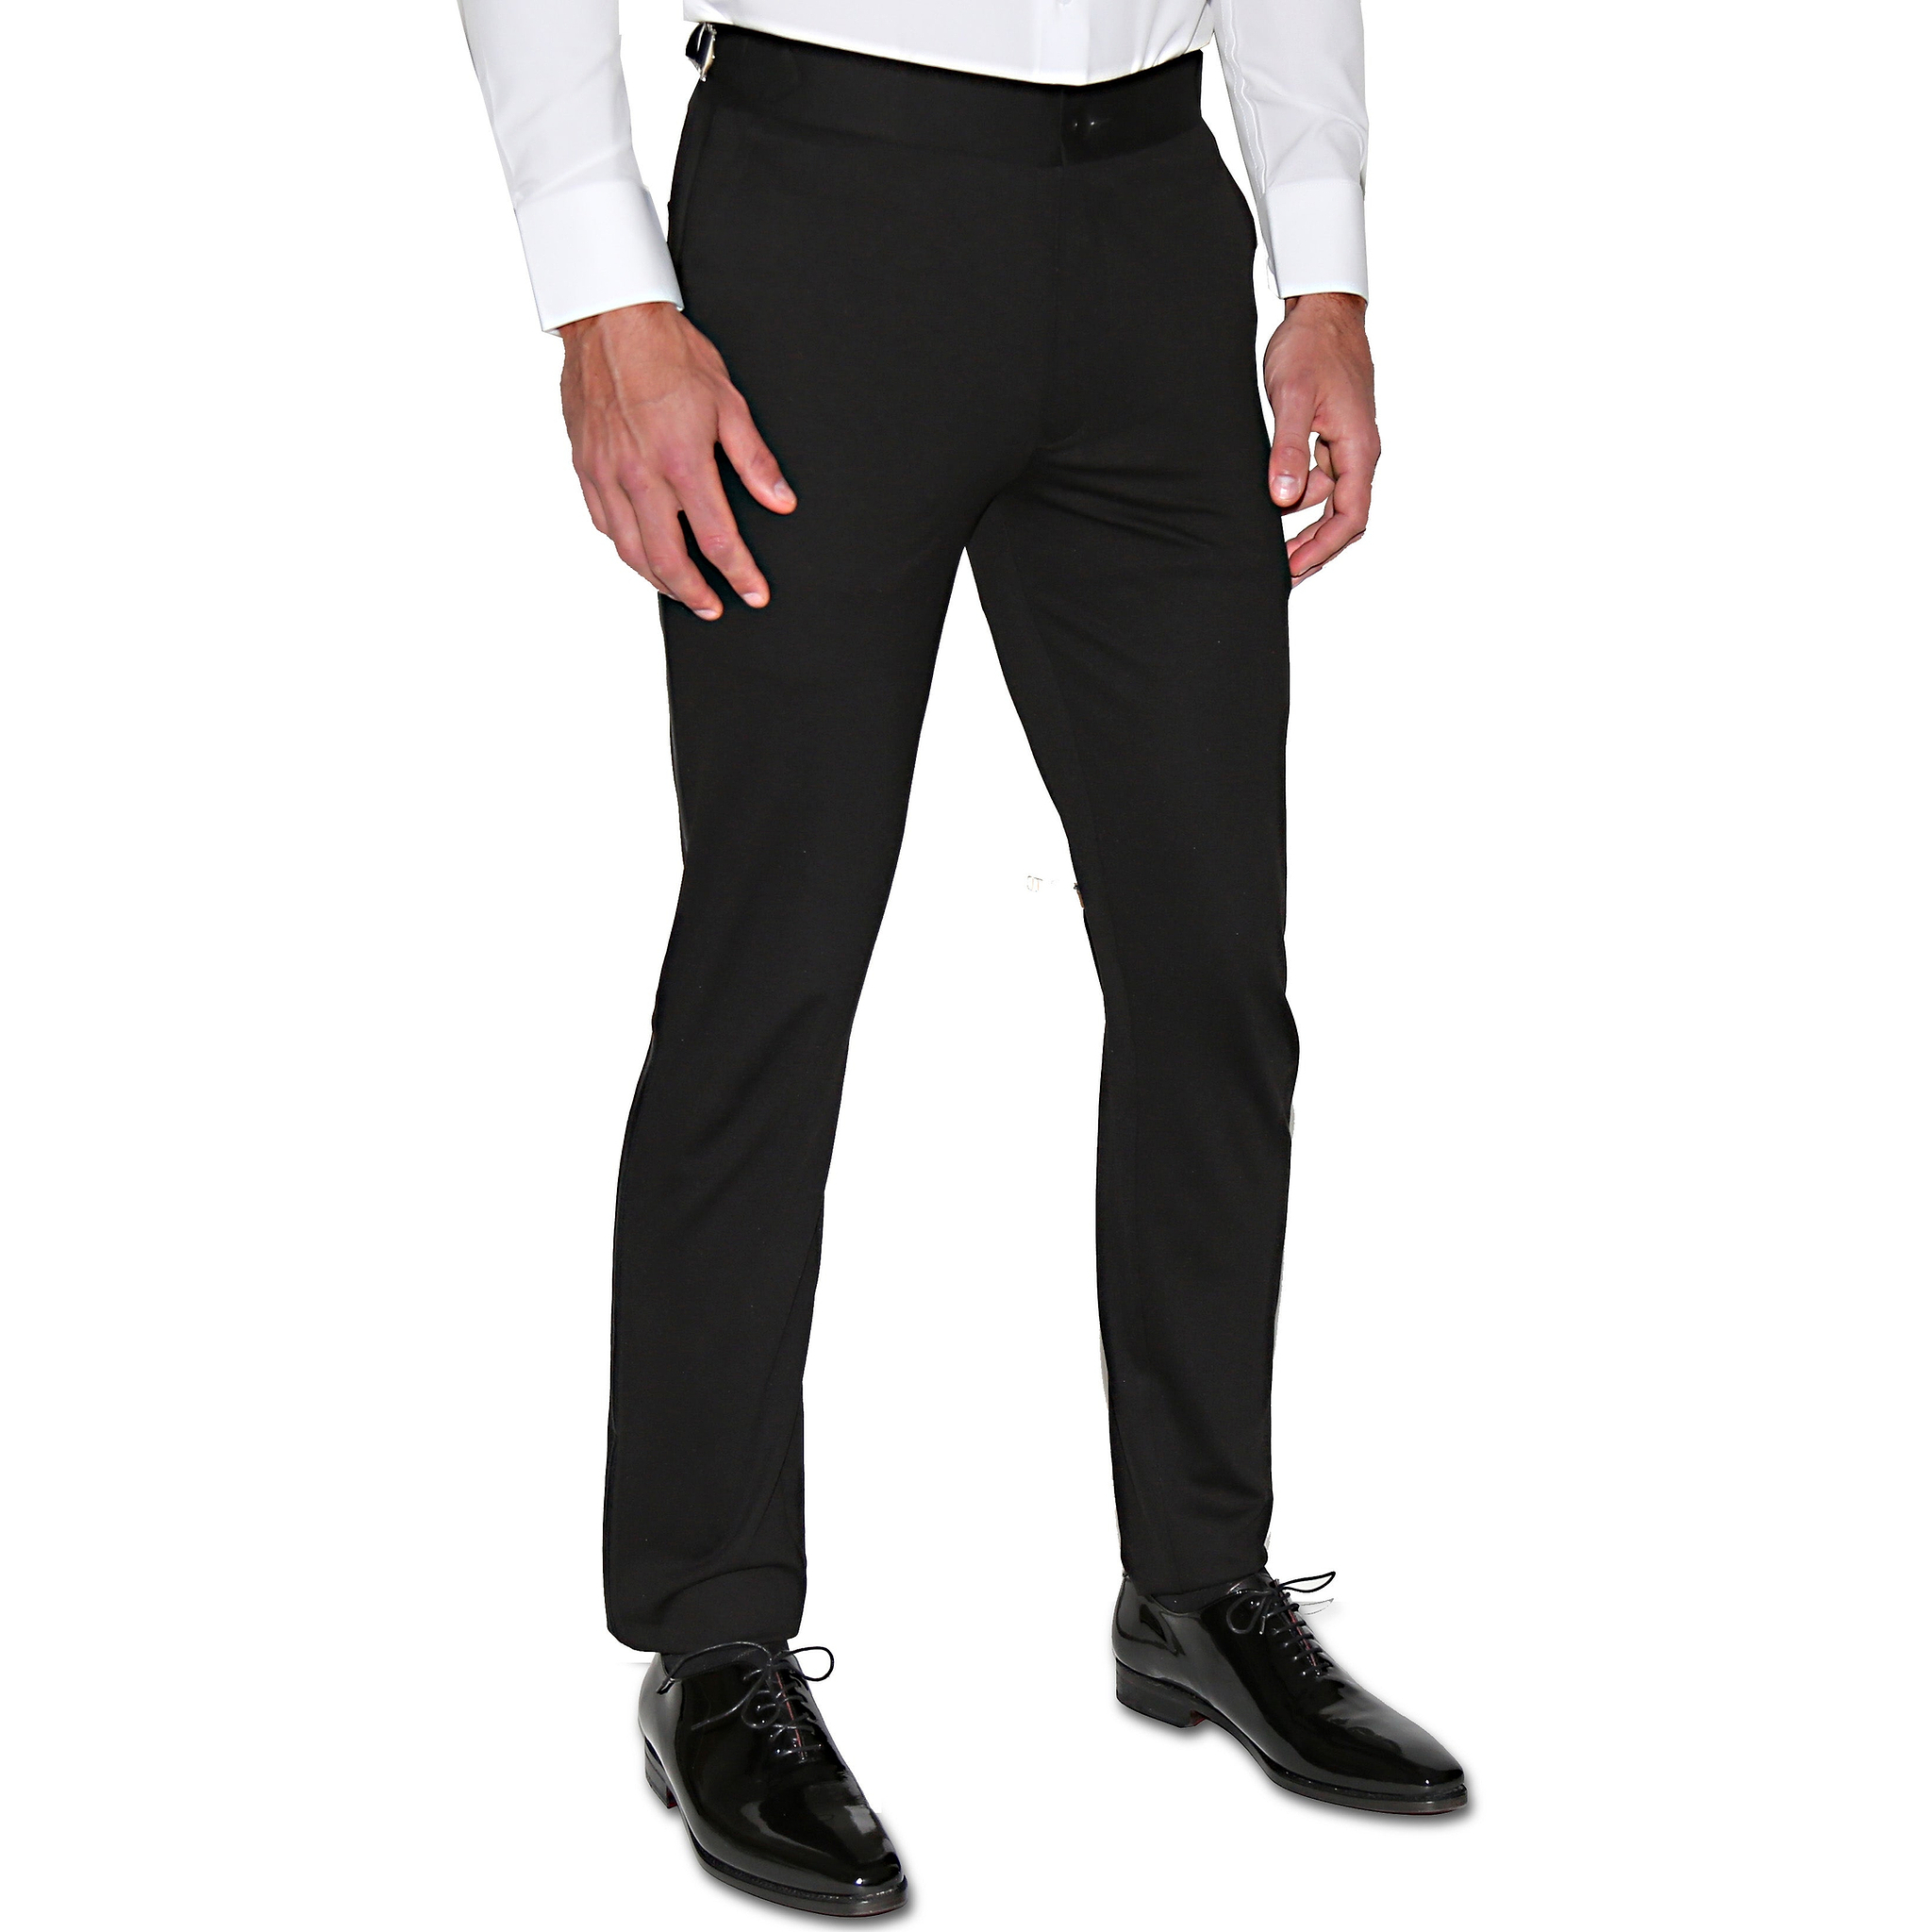 Men's Casual Cotton Slim Fit Formal Wedding Business Dress Pants 36 / White